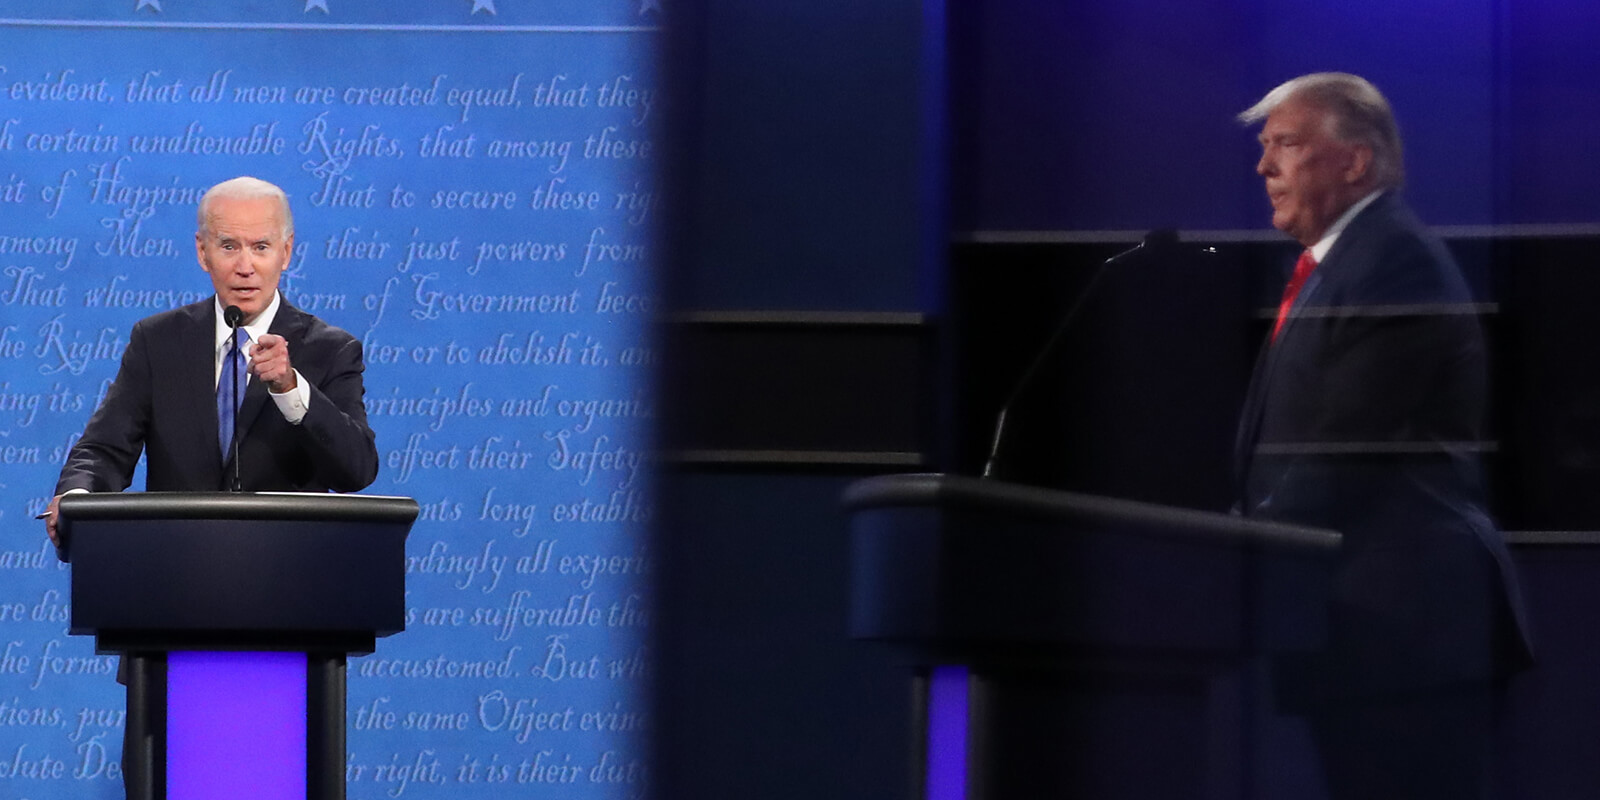 In final debate, Biden offers unity, clear path forward